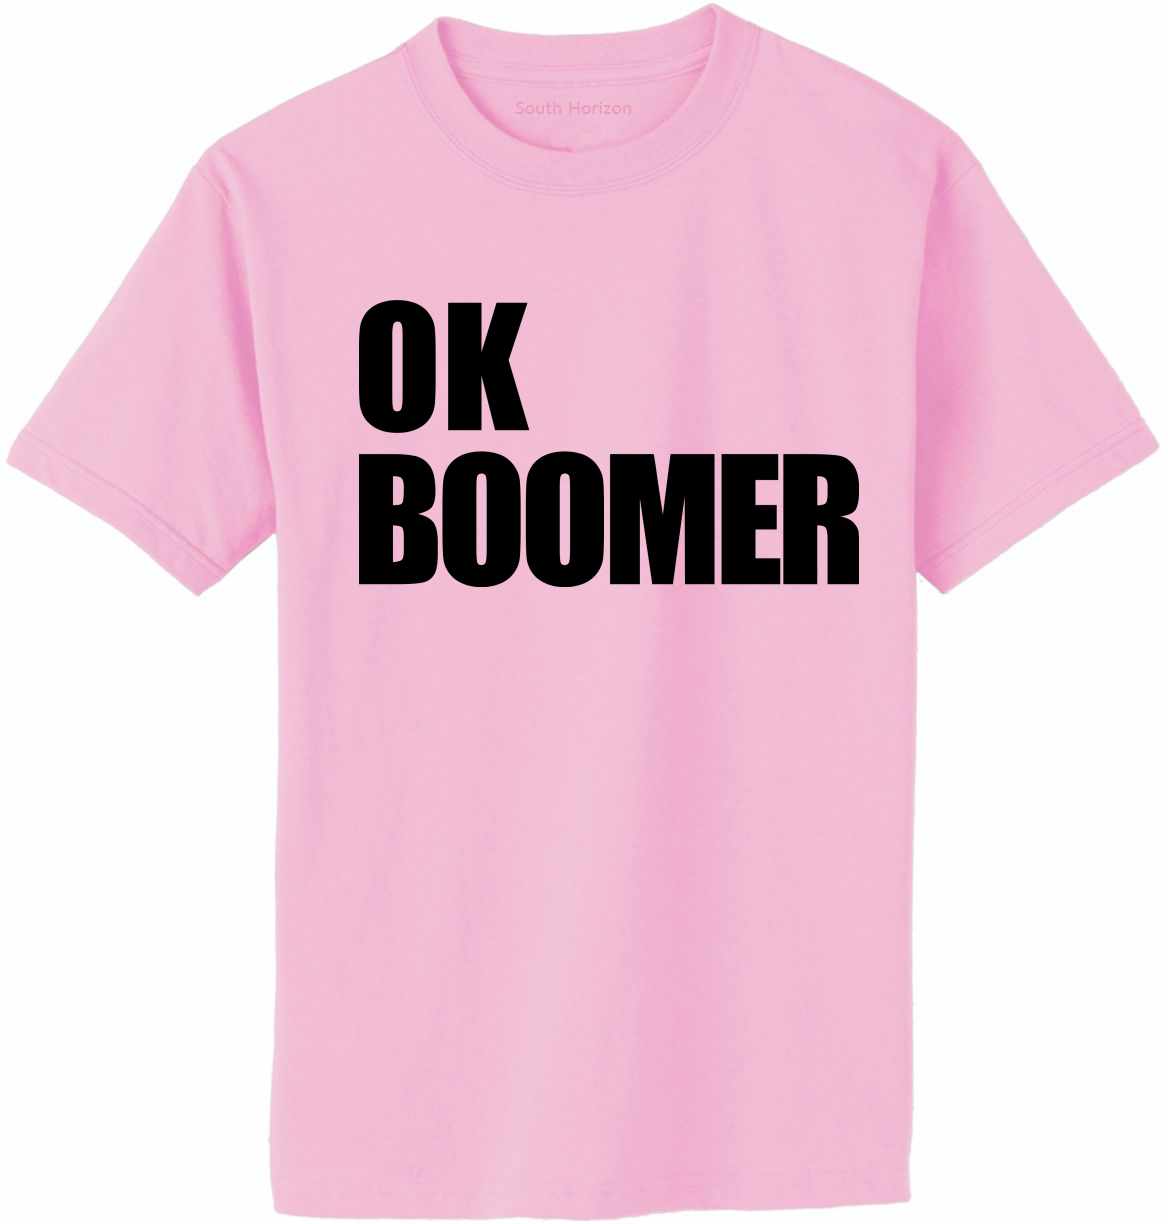 OK BOOMER Adult T-Shirt (#981-1)